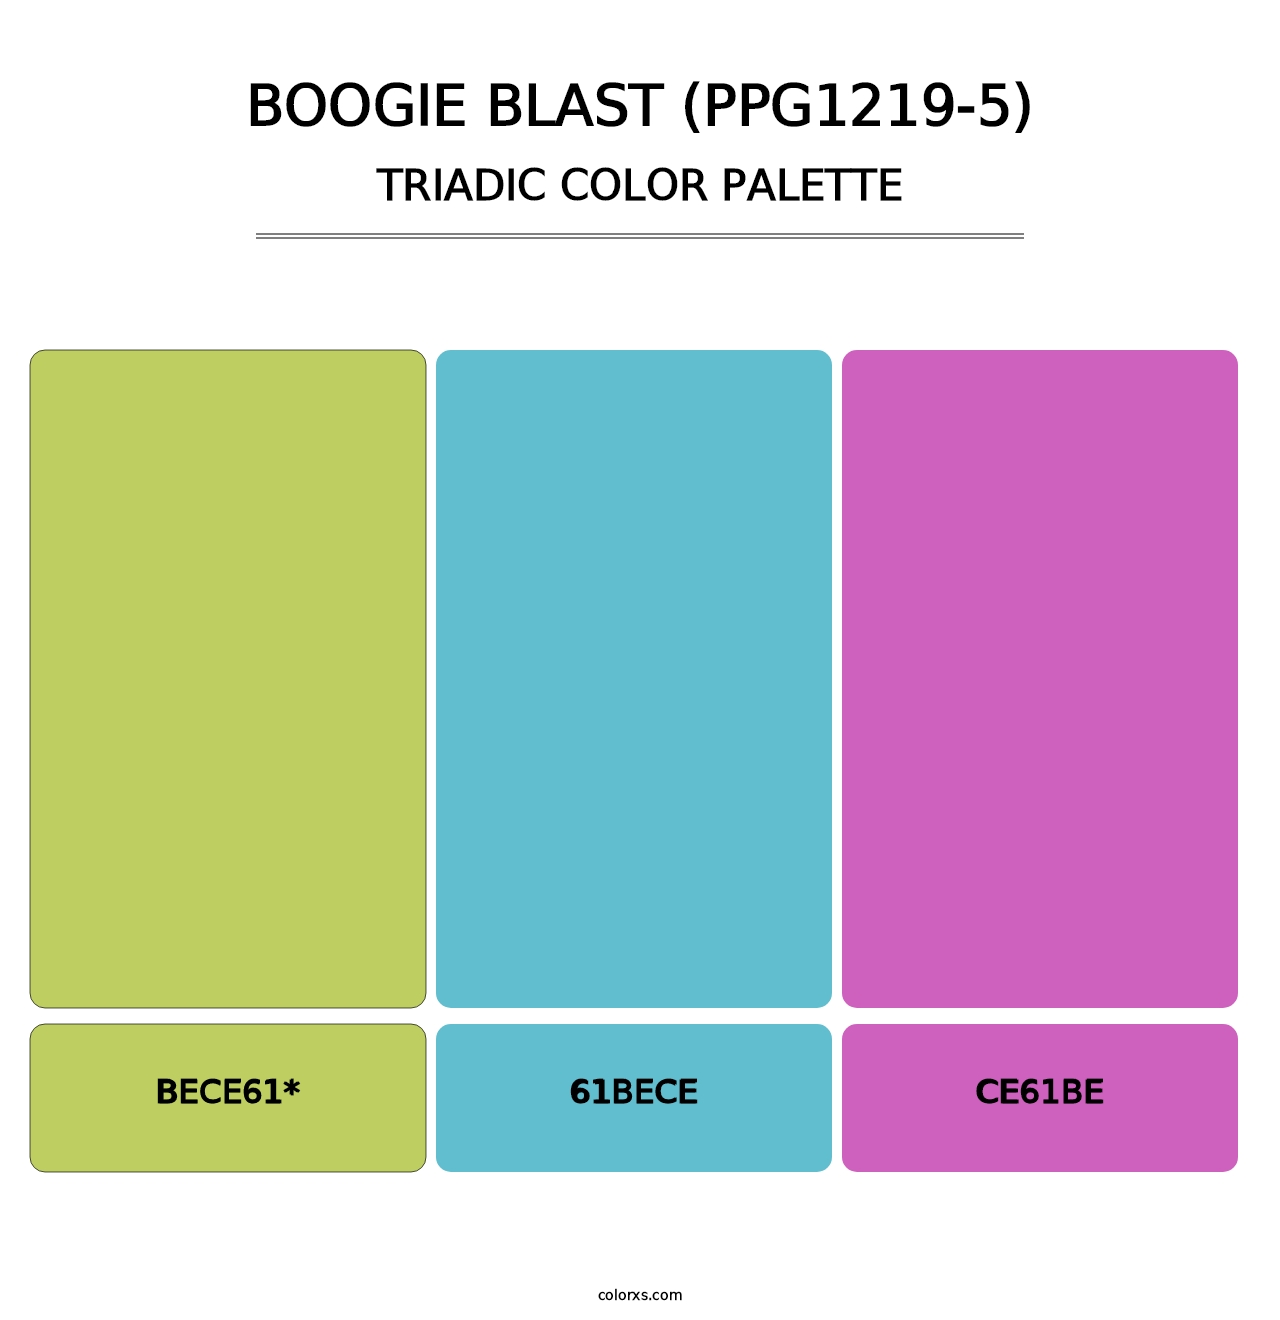 Boogie Blast (PPG1219-5) - Triadic Color Palette